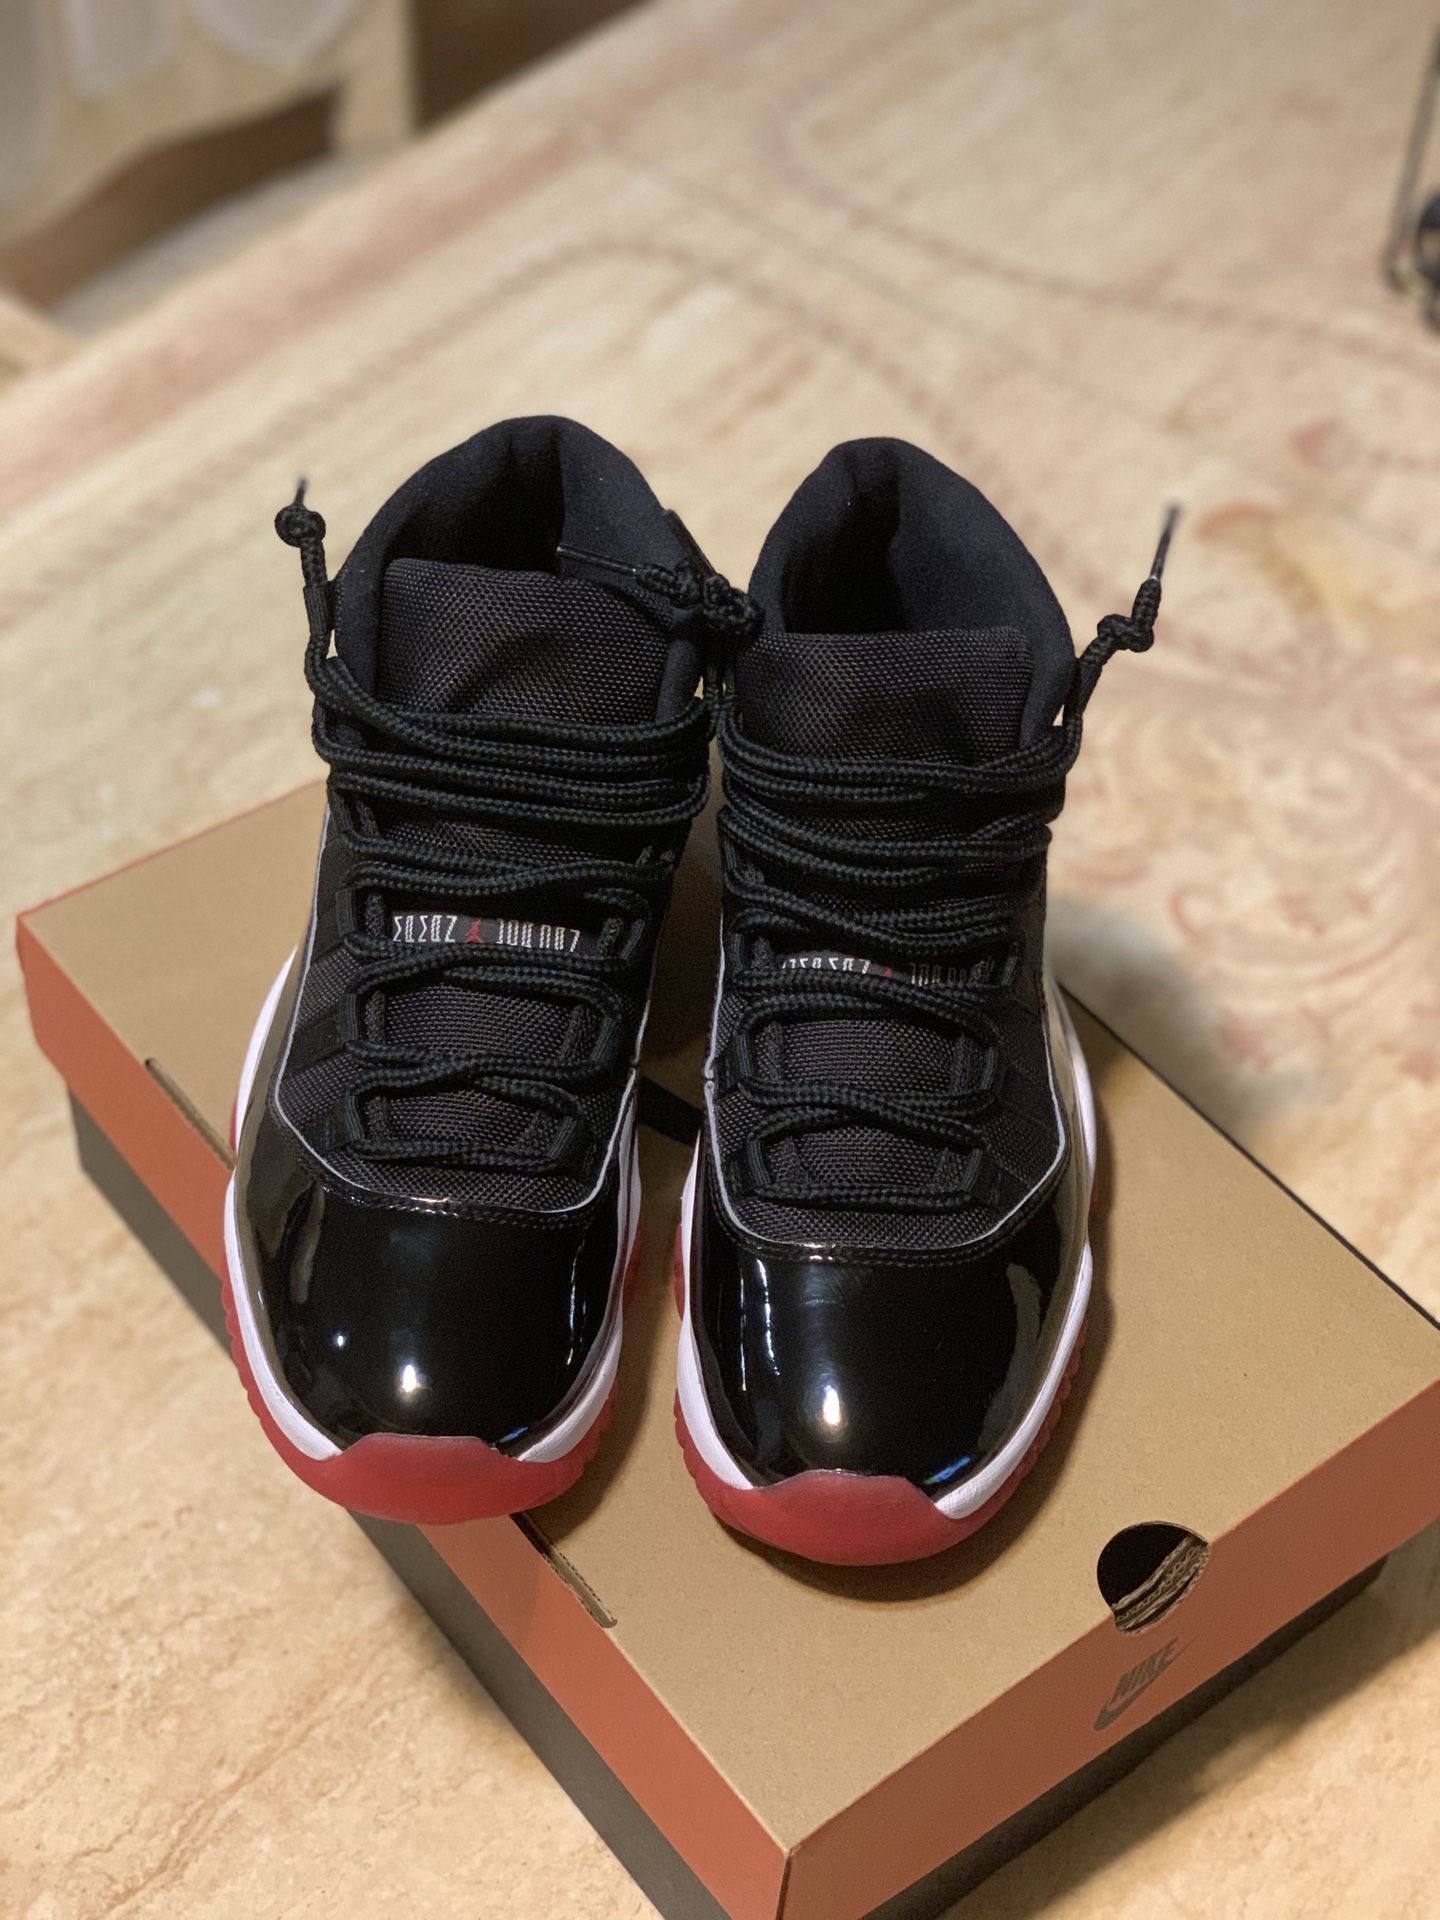 Air Jordan 11 Retro ‘Bred 2019’ Size 10